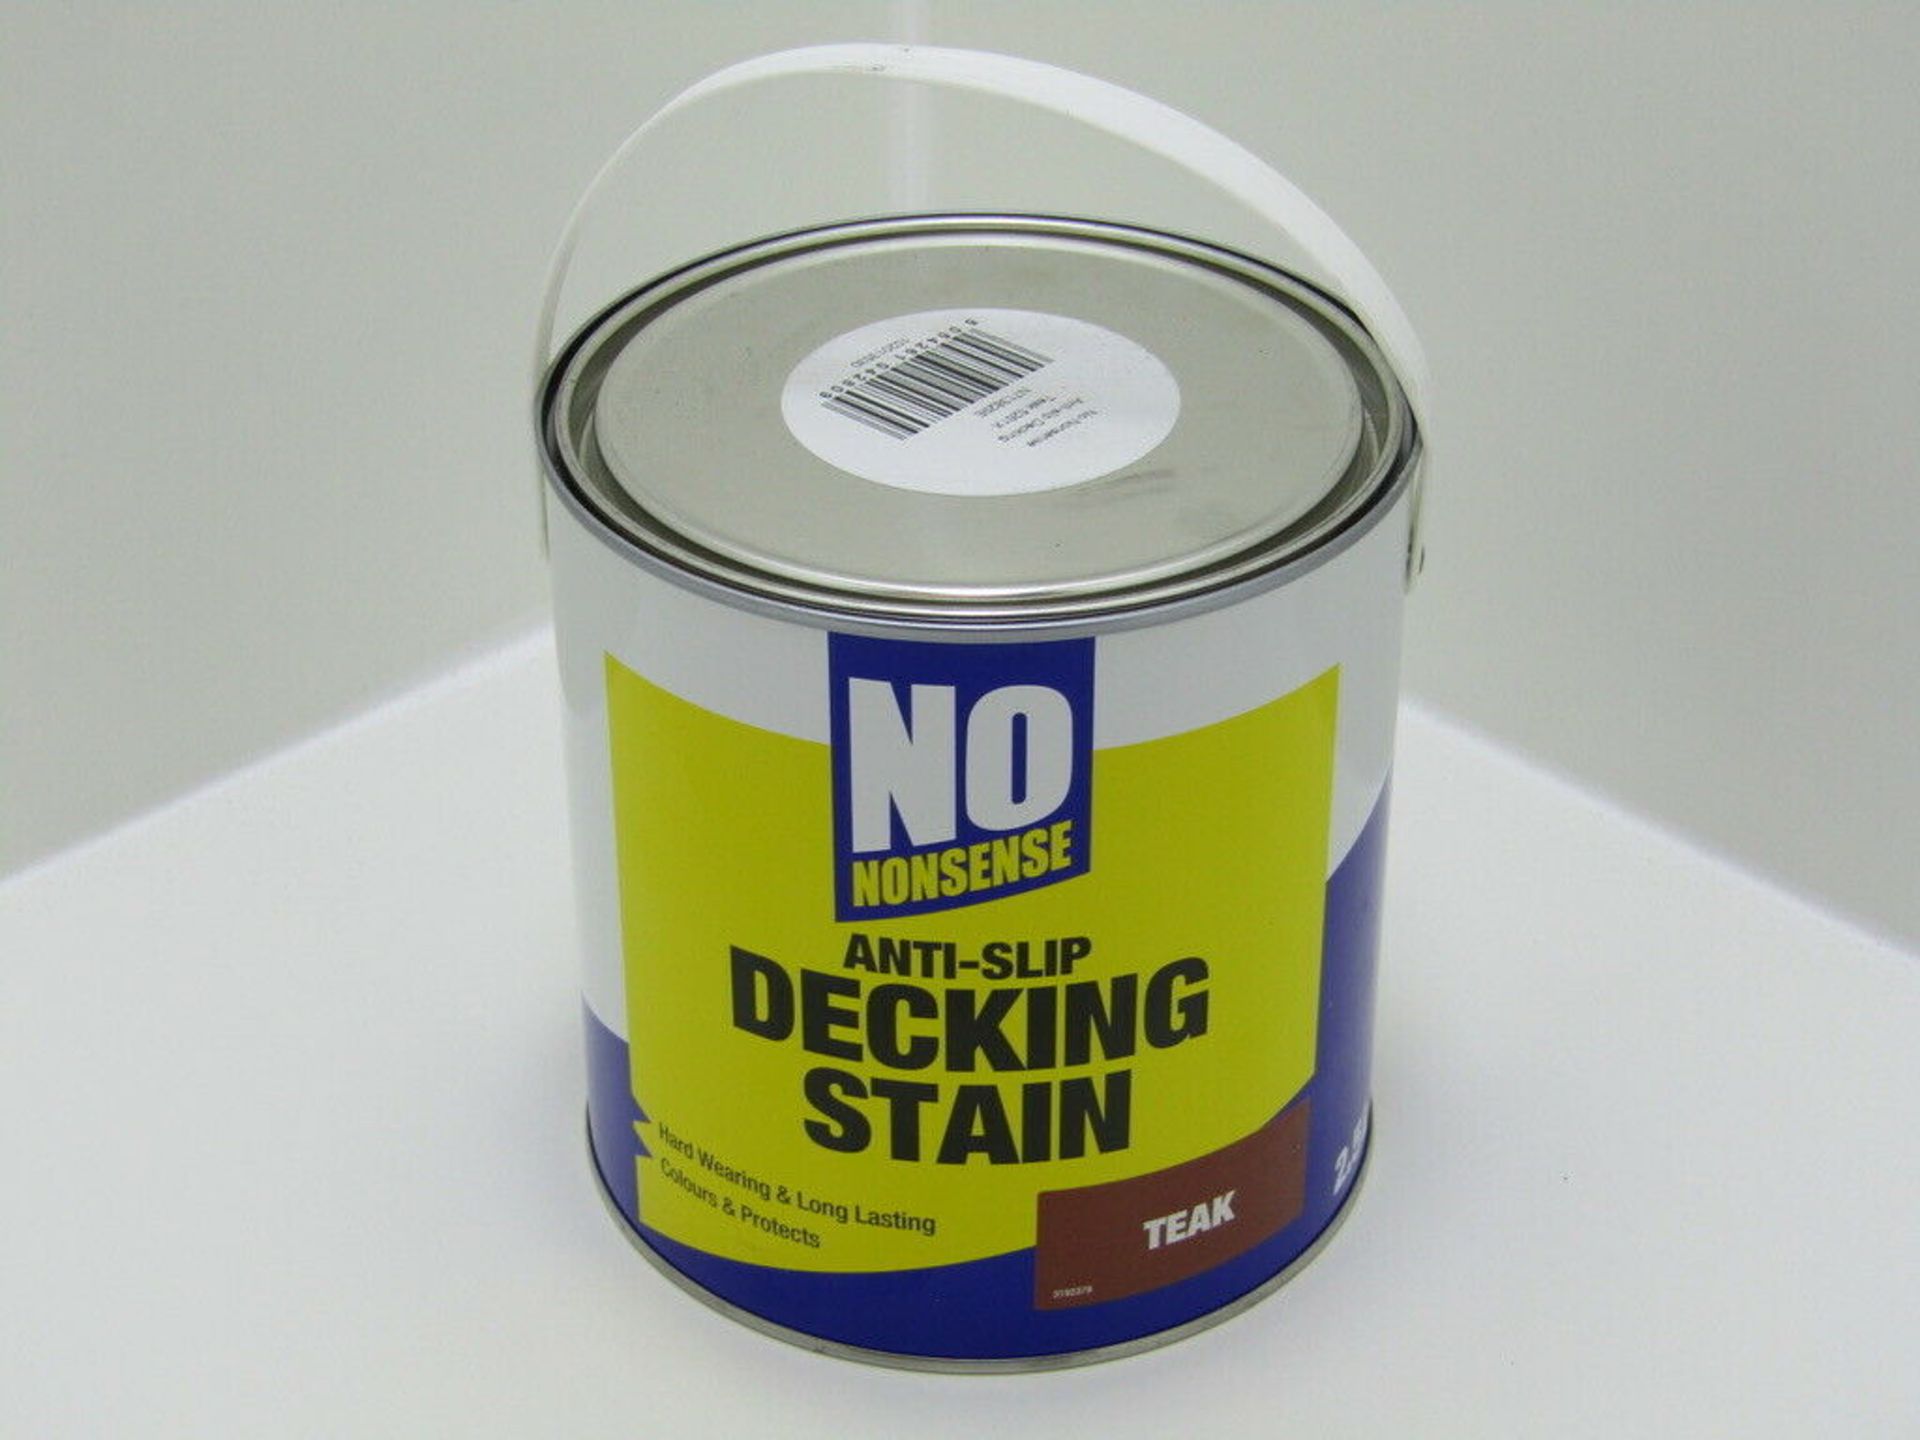 Anti Slip Decking Paint. Teak. 2.5 litre - Image 3 of 3